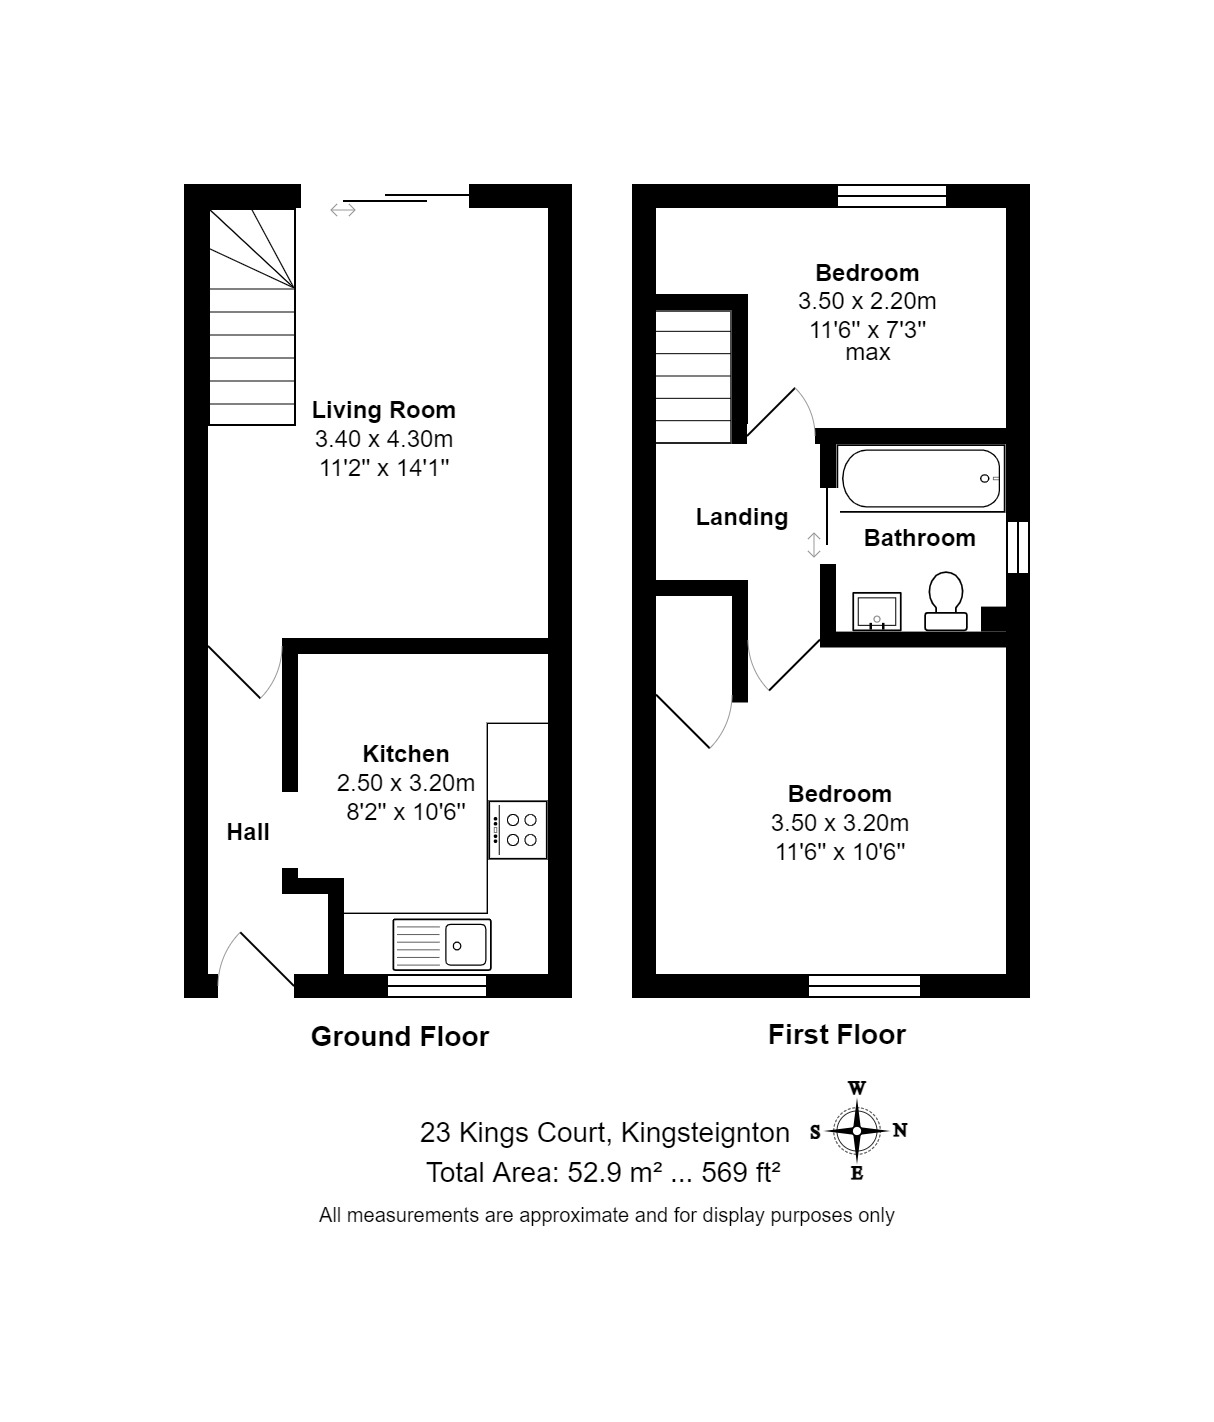 2 bed to rent in Kingsteignton, Kingsteignton - Property floorplan